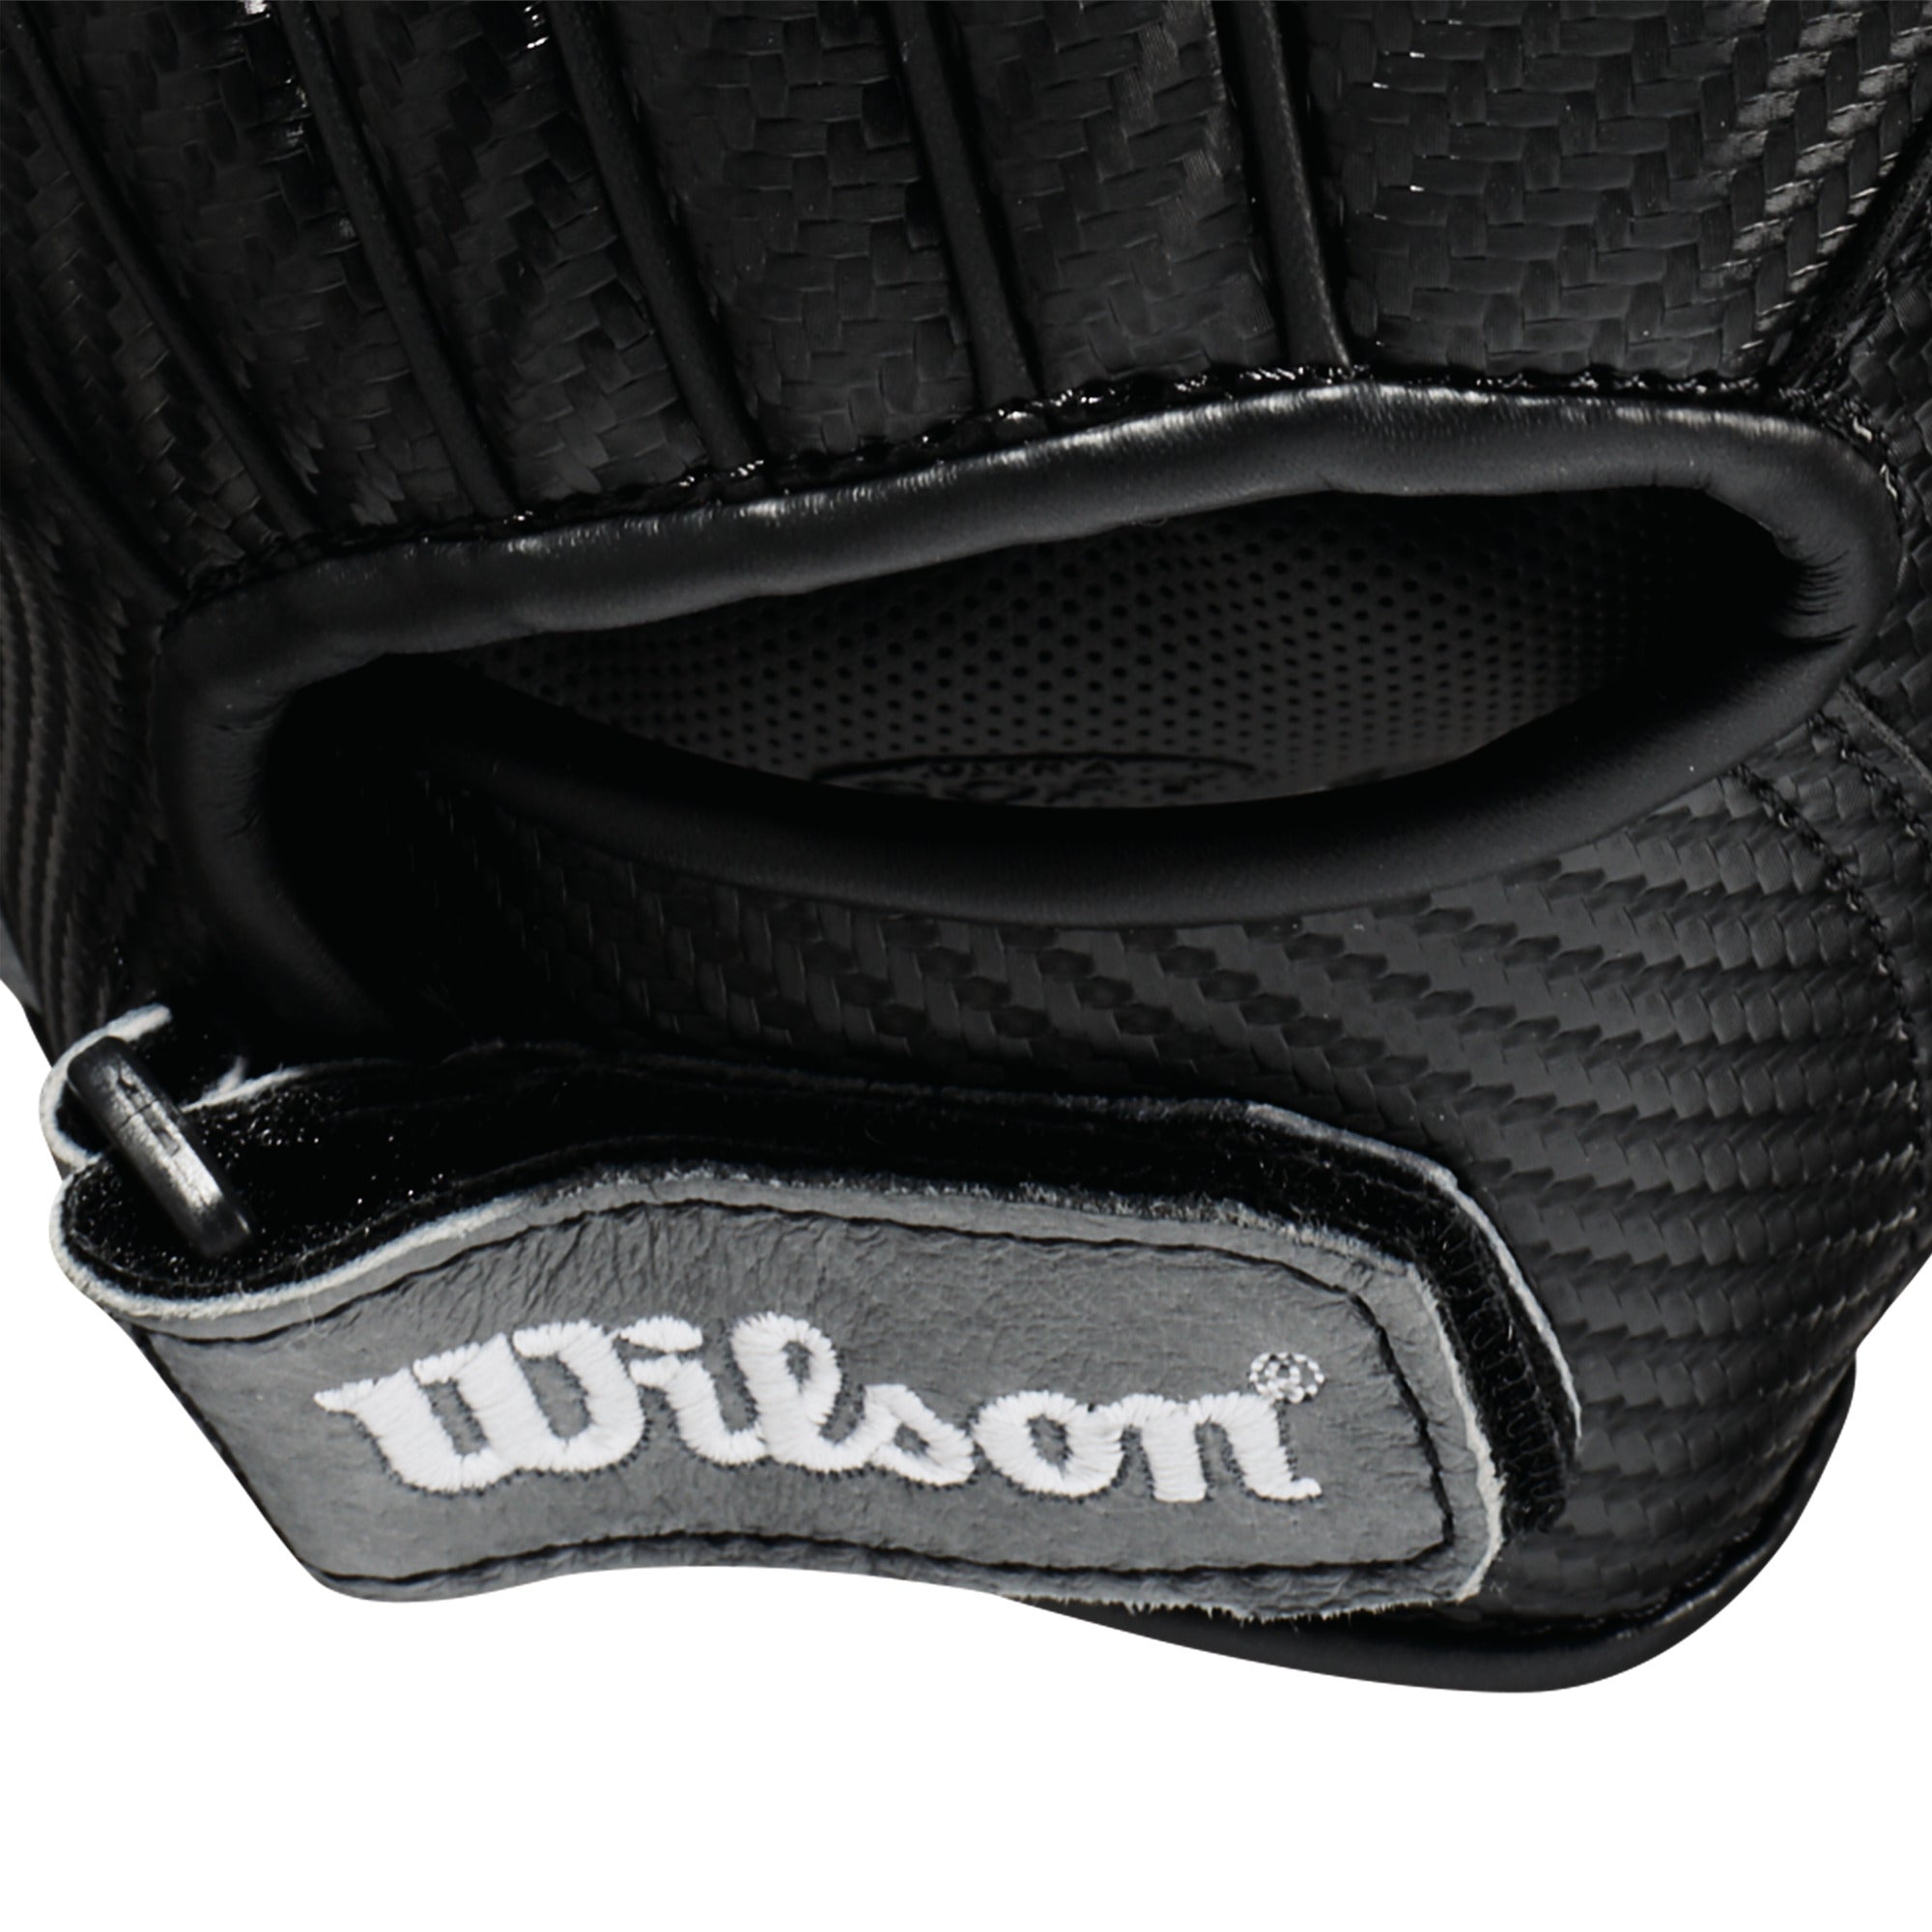 Wilson A360 Utility Baseball Glove - 12.5